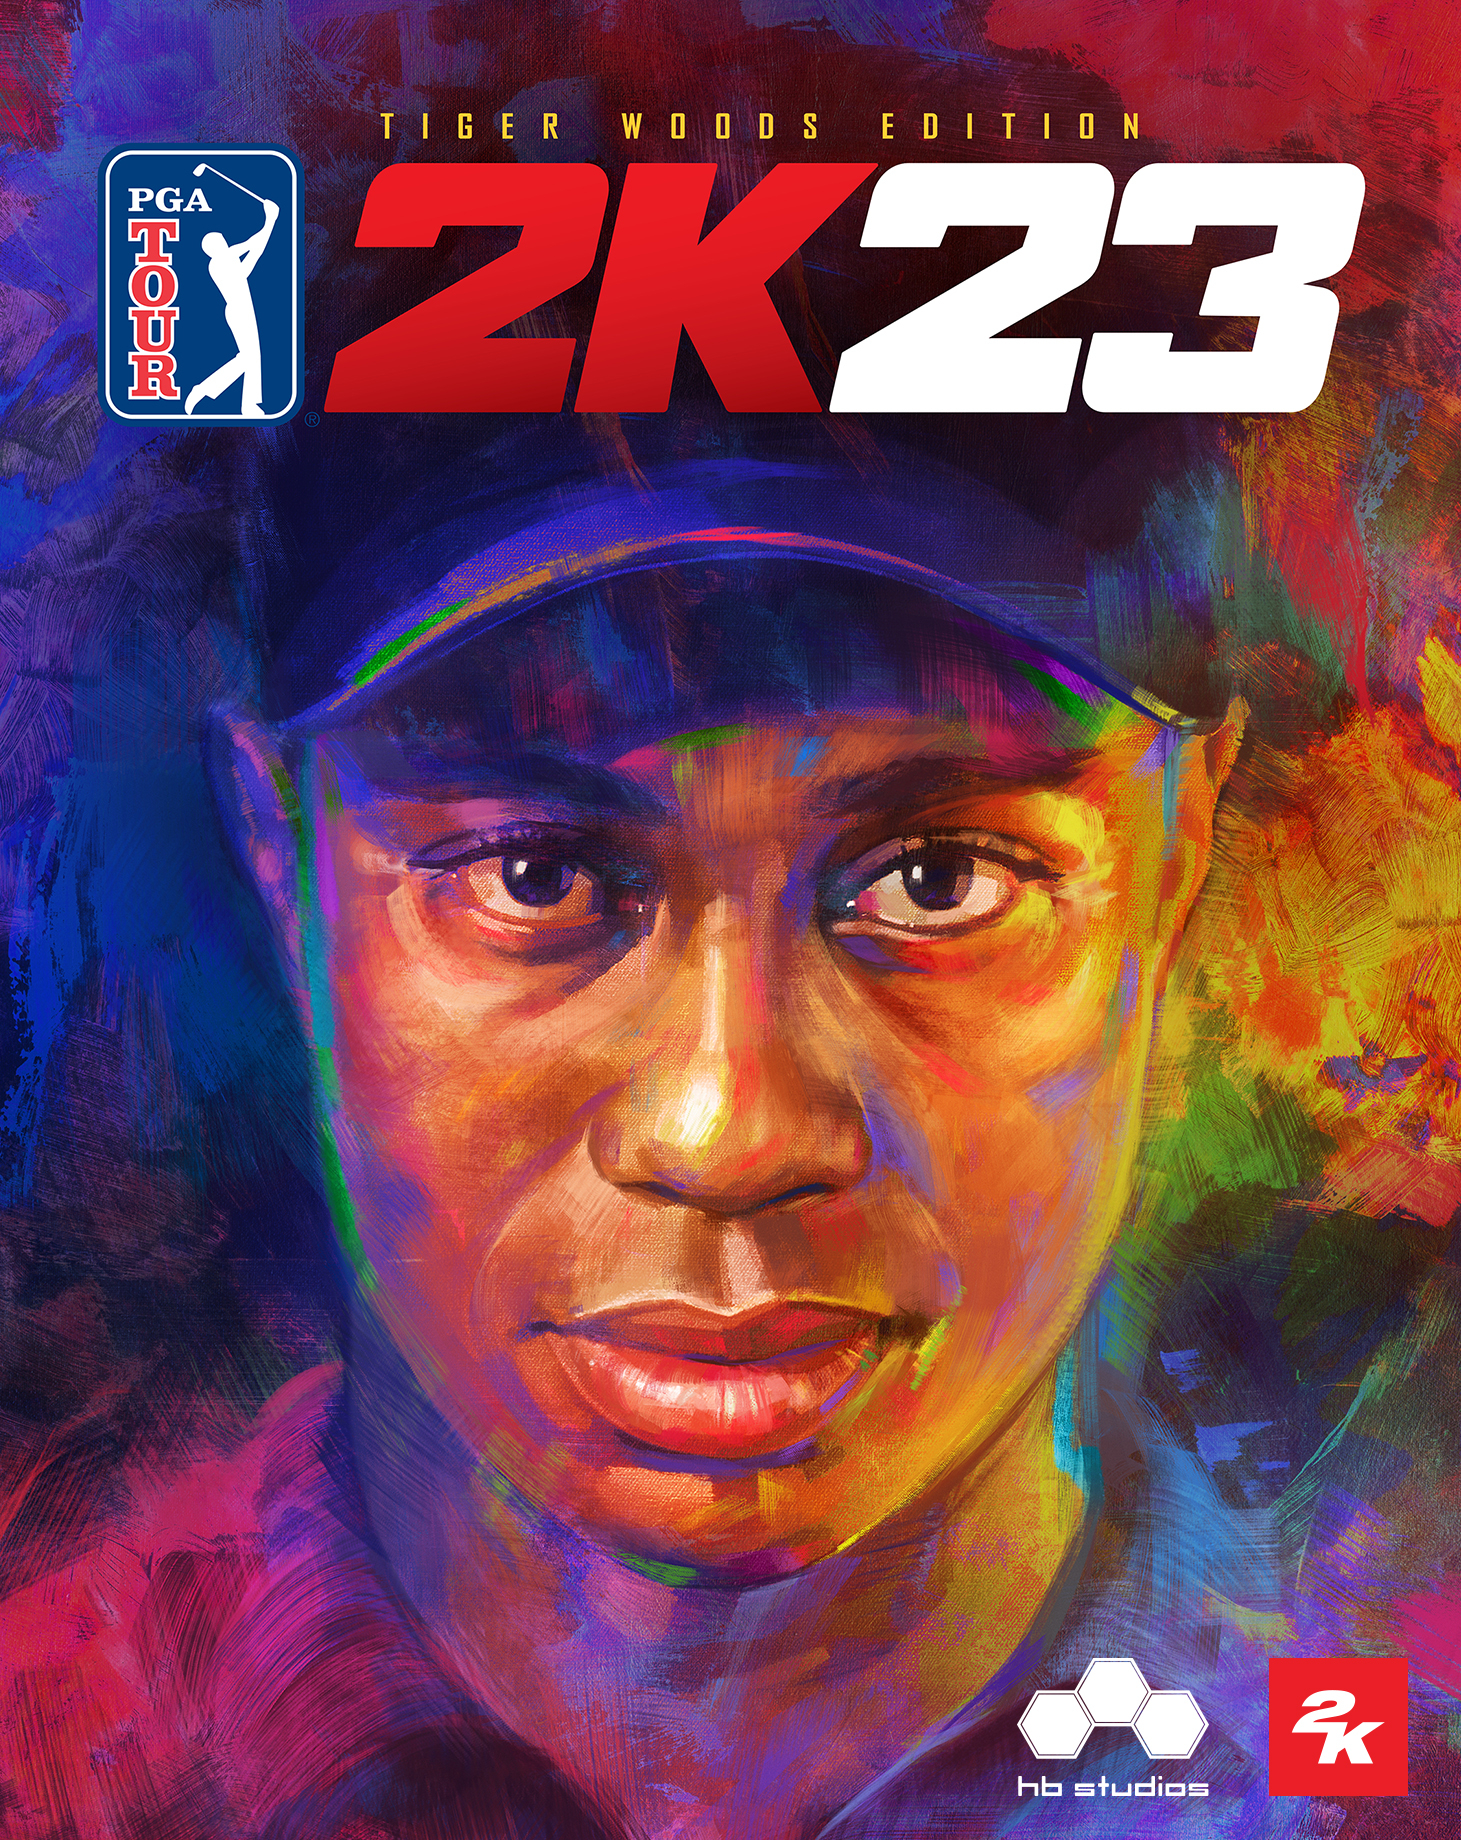 Steam deck streaming 2k23 : r/NBA2k